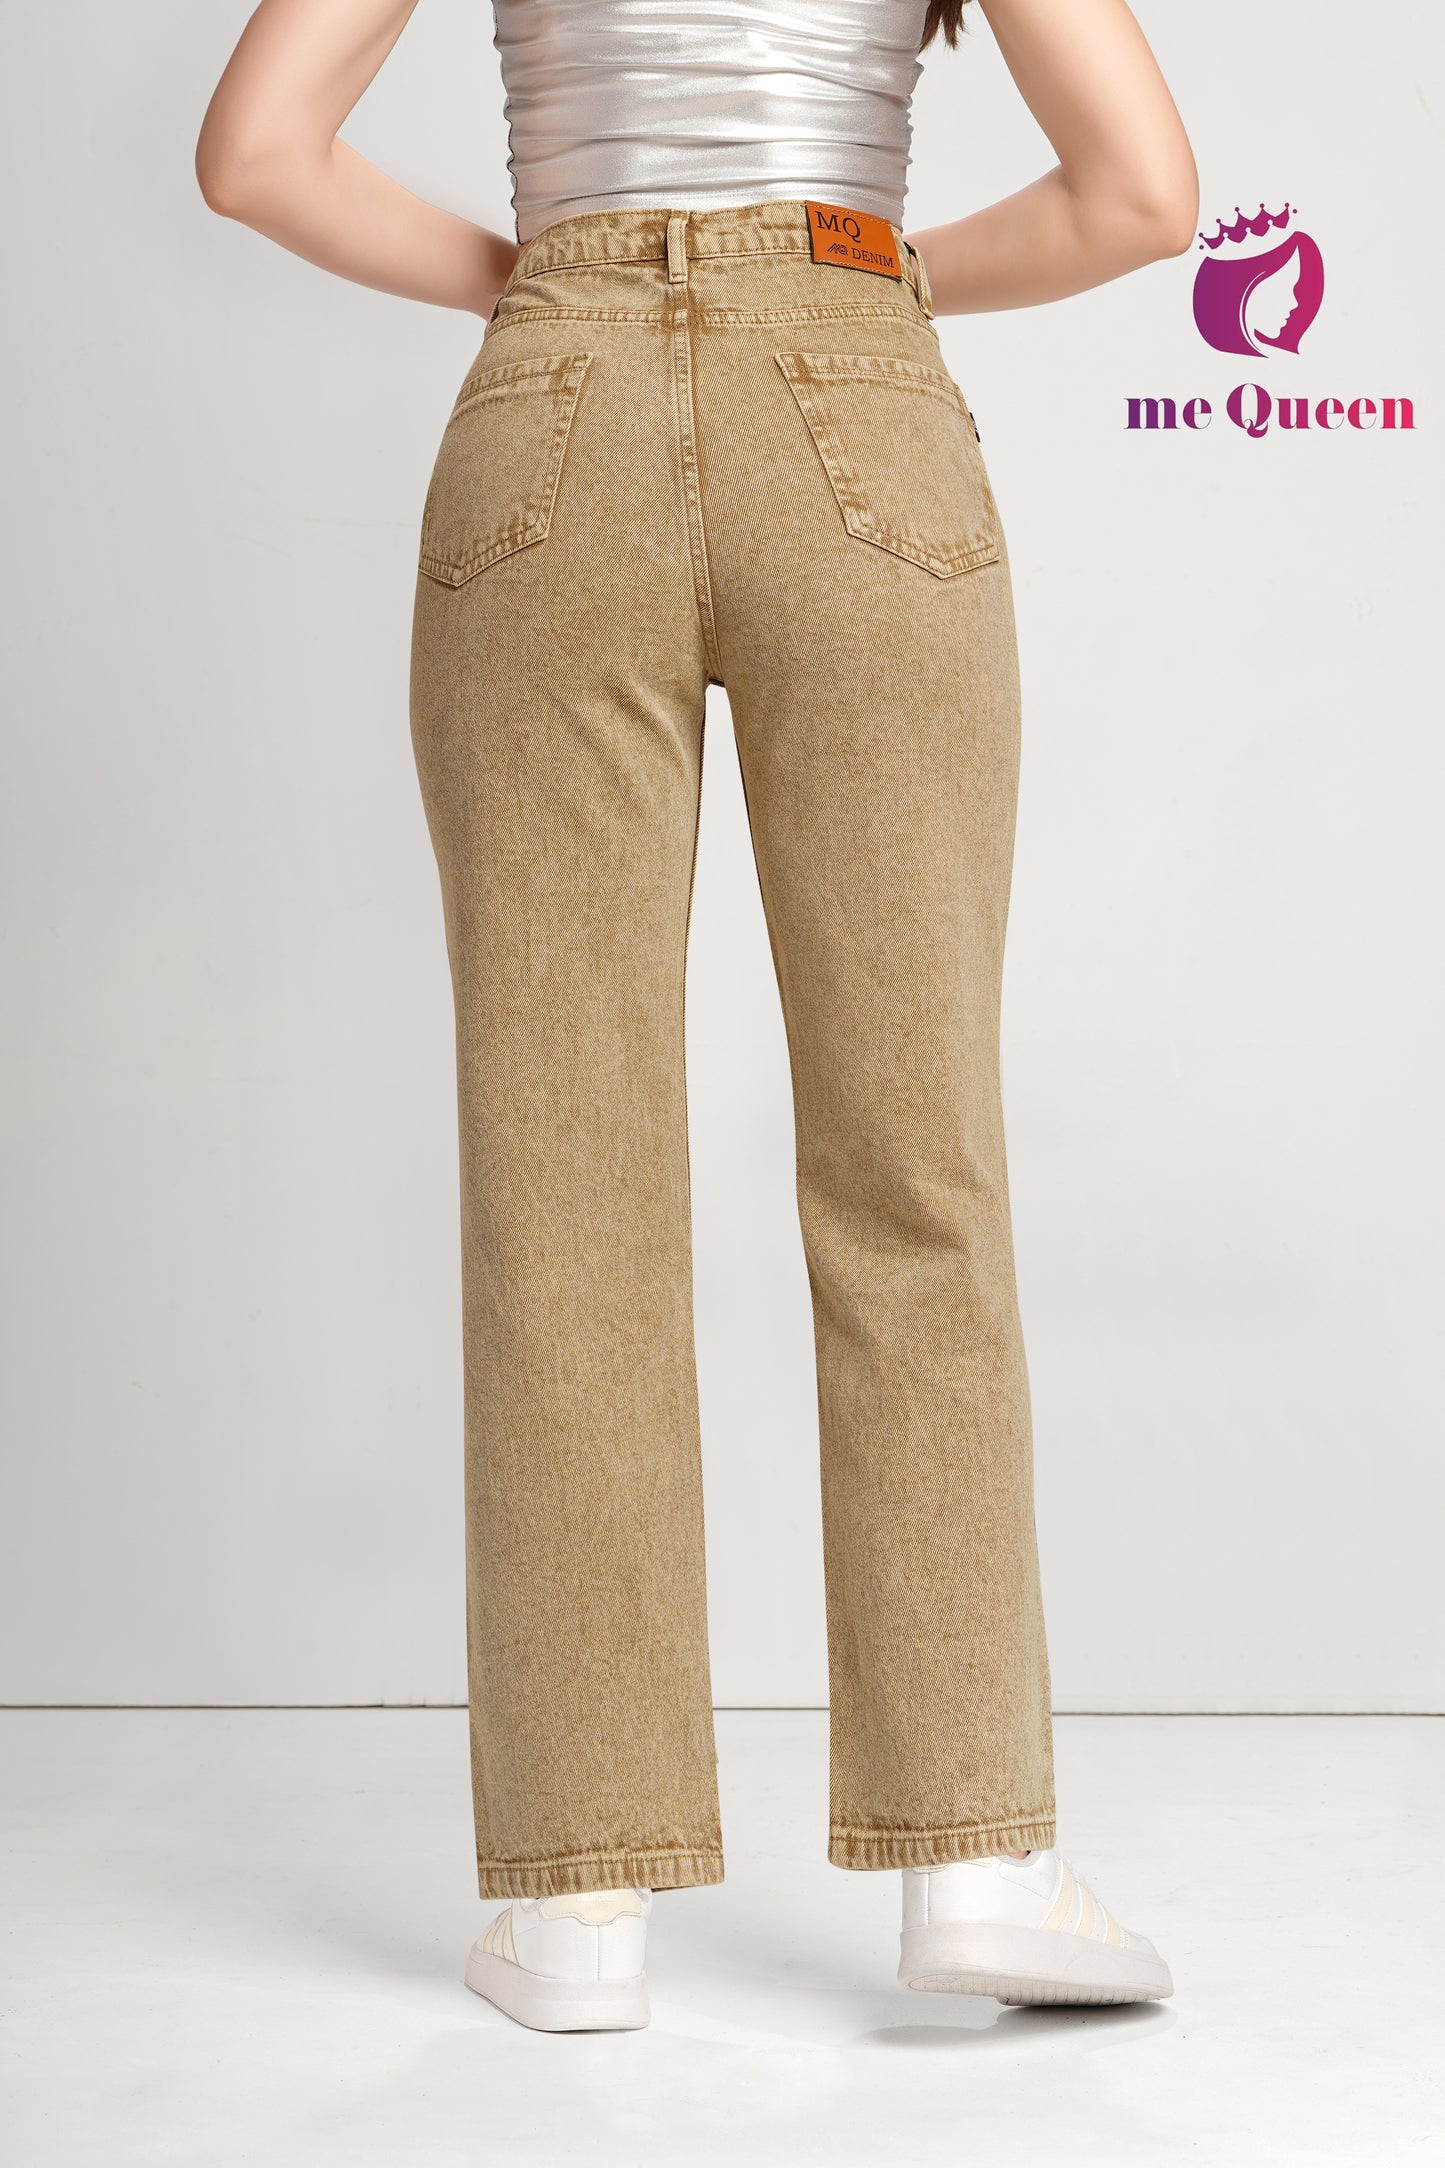 MeQueen Women's Tan Loose Fit Denim Jeans